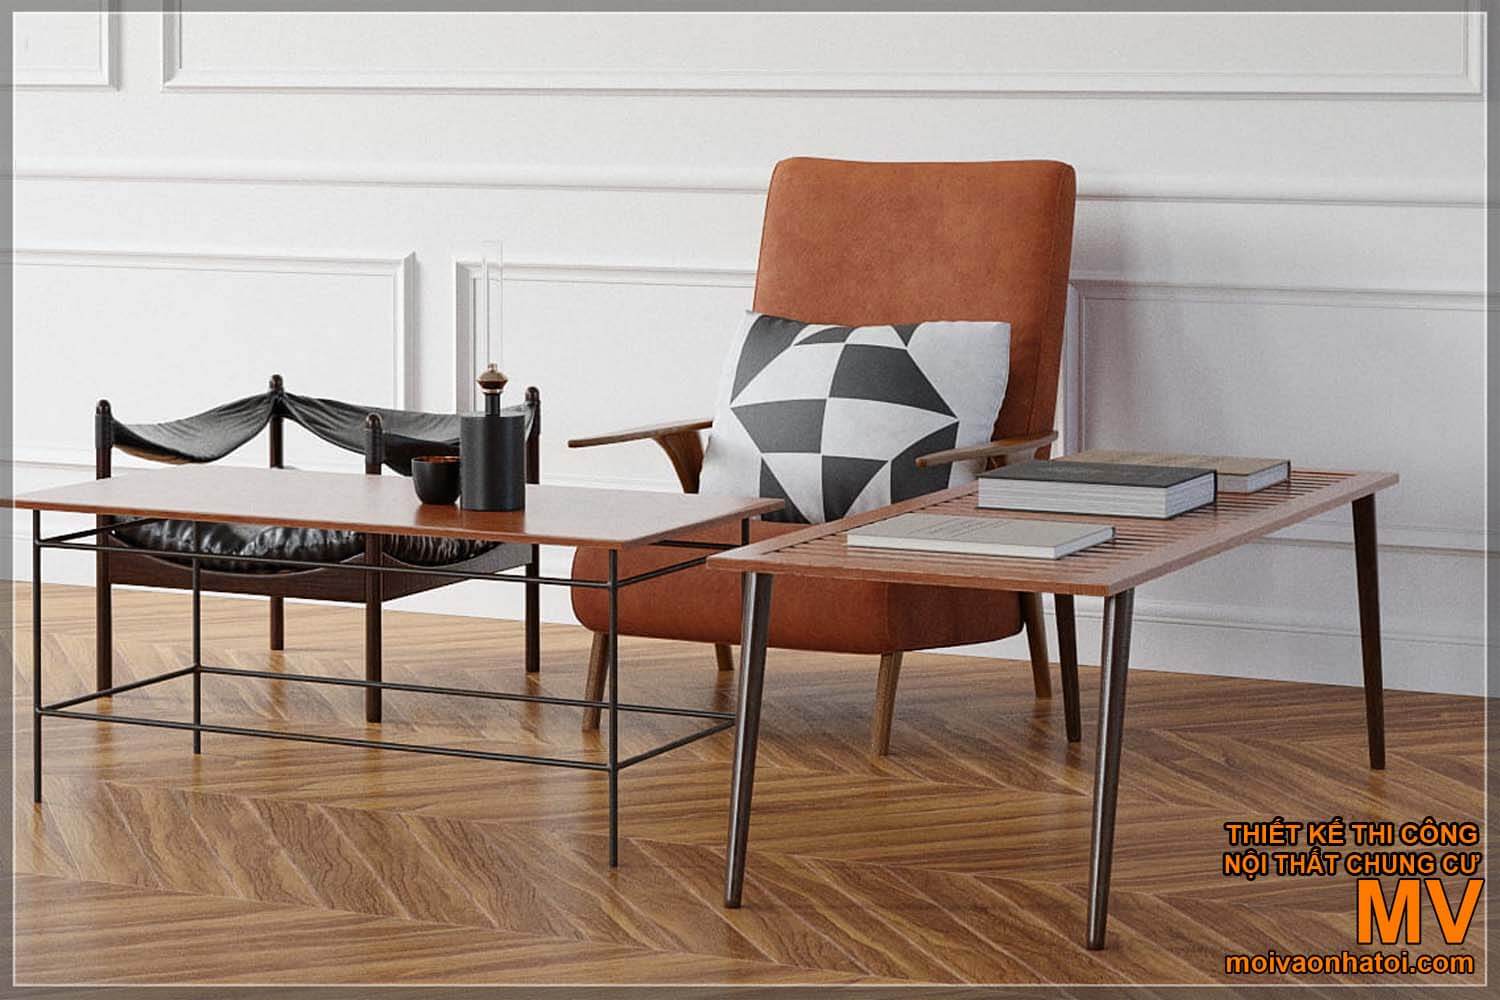 Sample furniture scandinavian style furniture